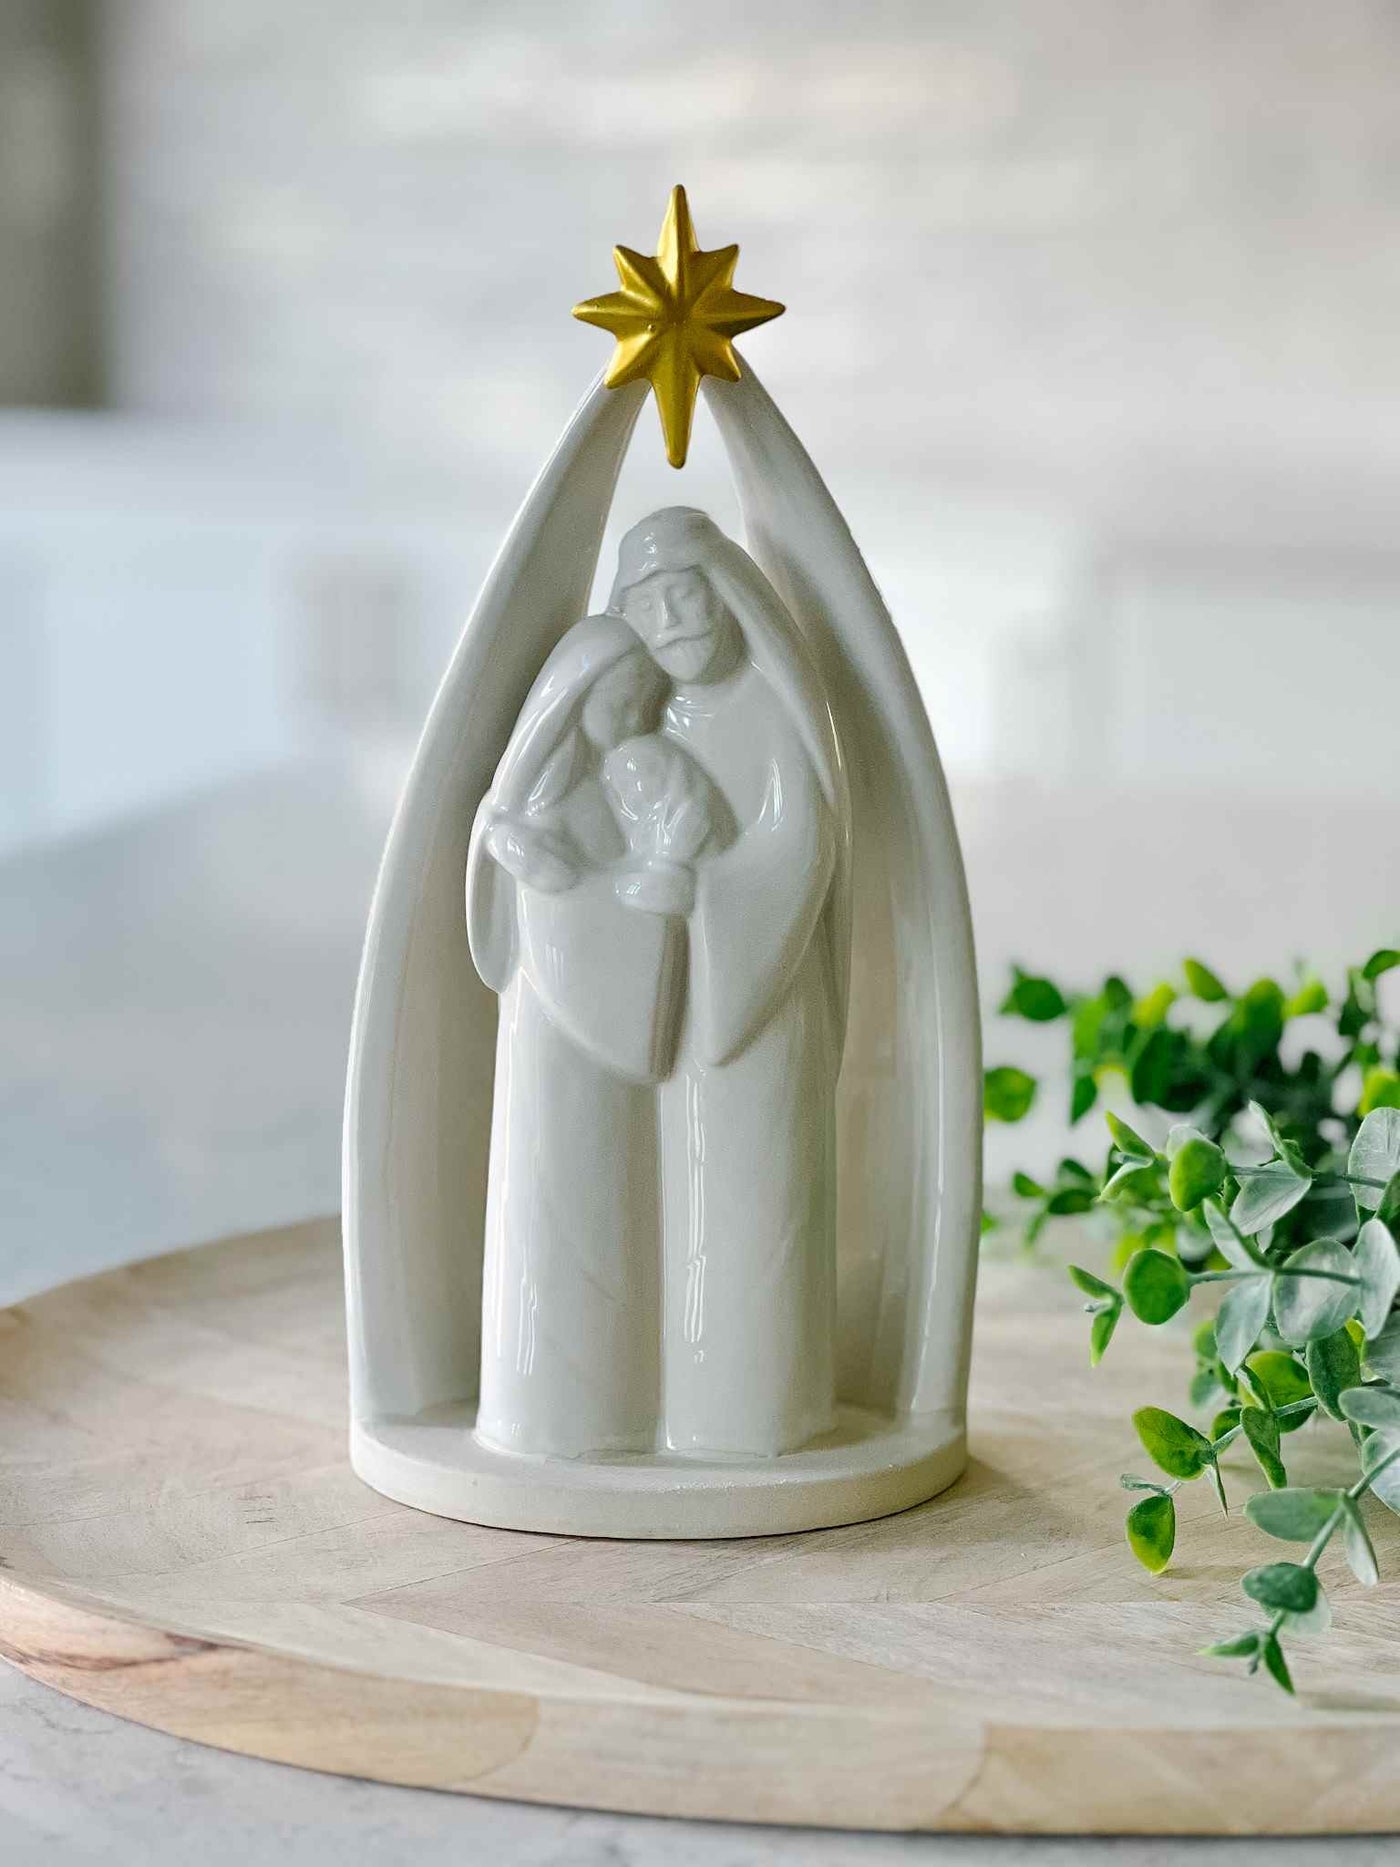 Ceramic Holy Family Figure